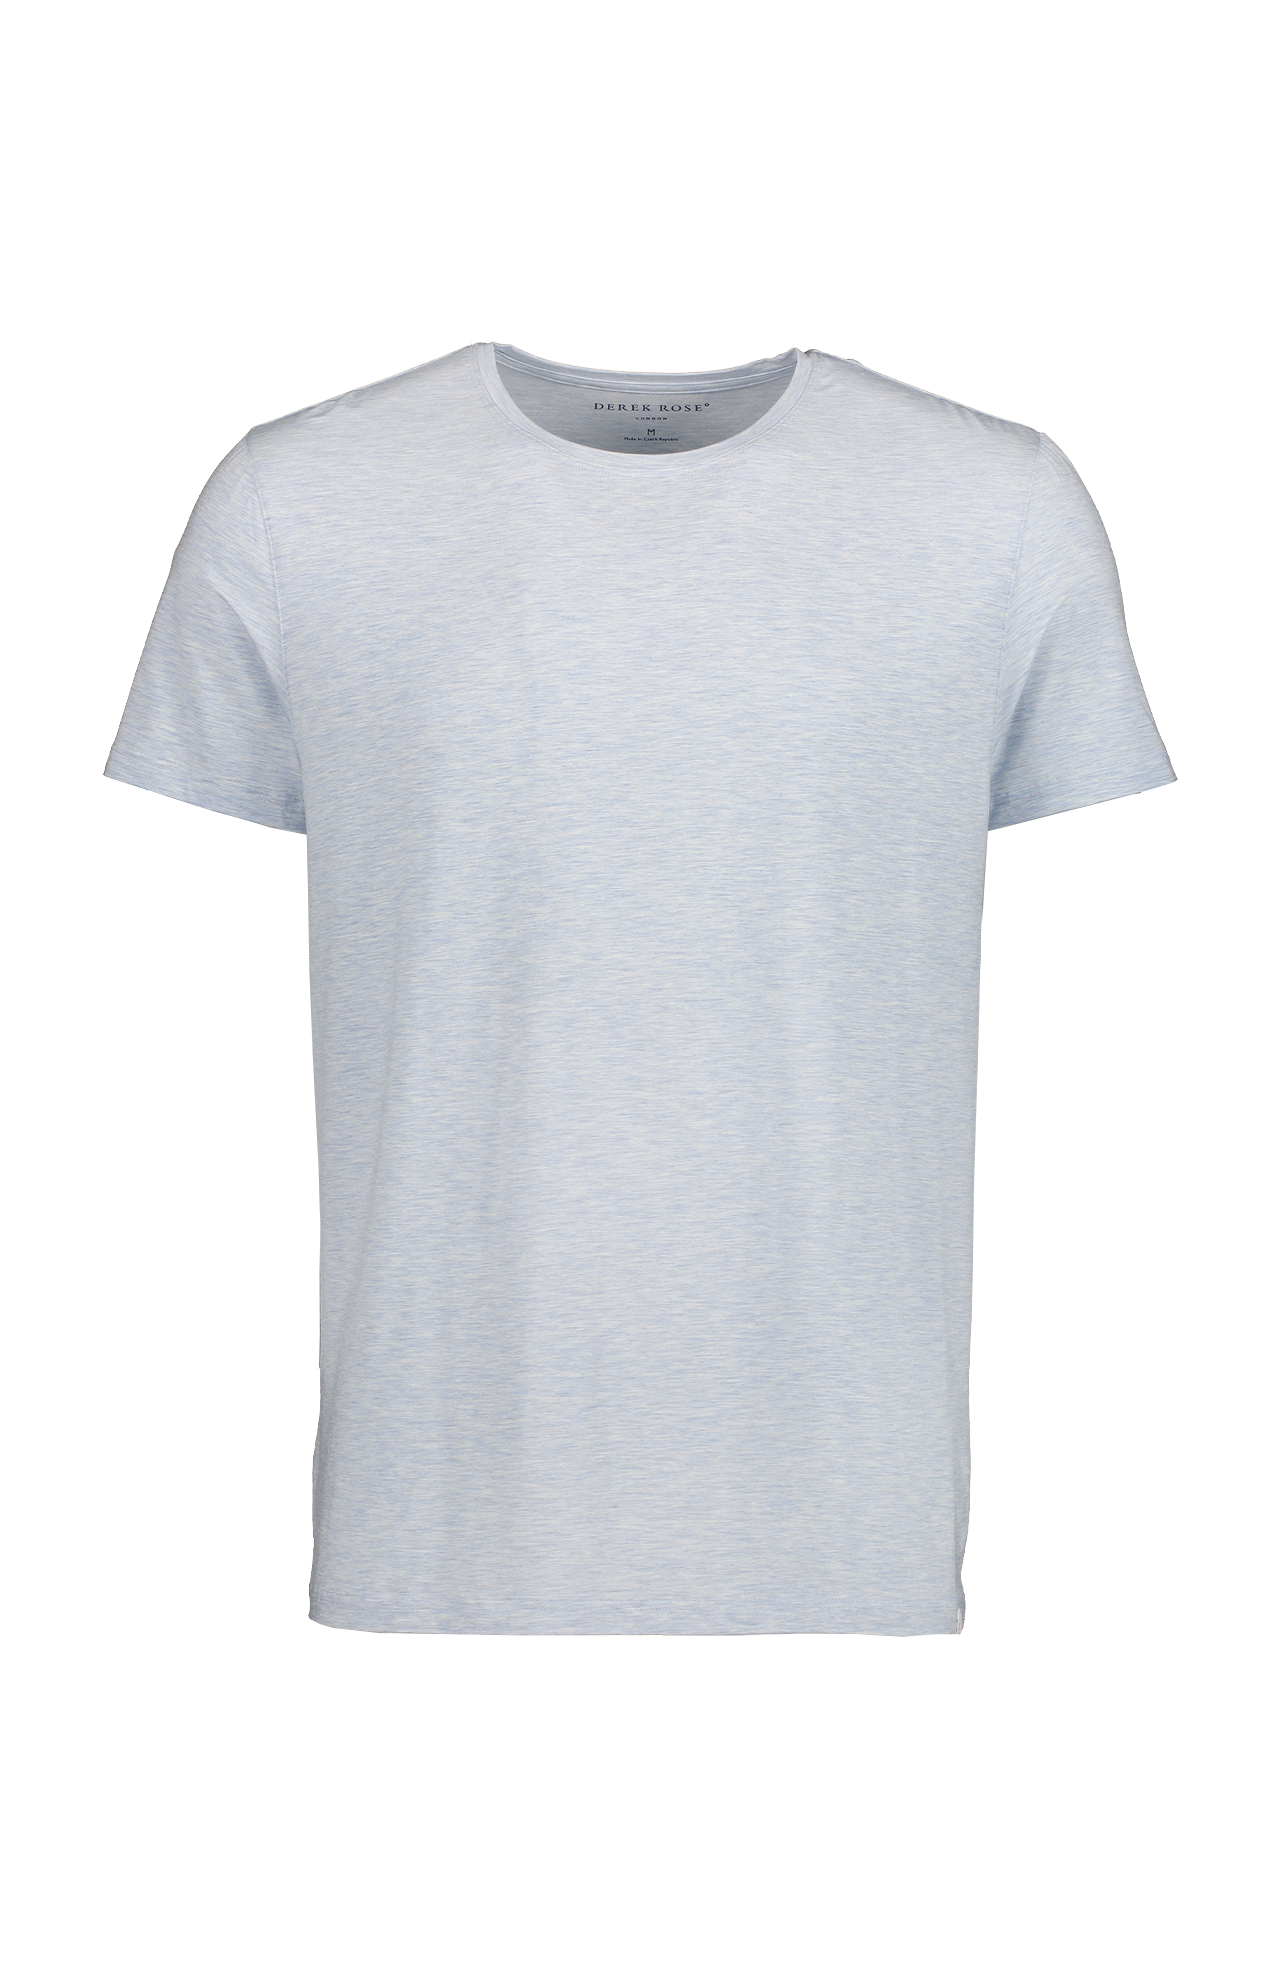 Ethan 1 Short Sleeve T-Shirt (7145030254707)